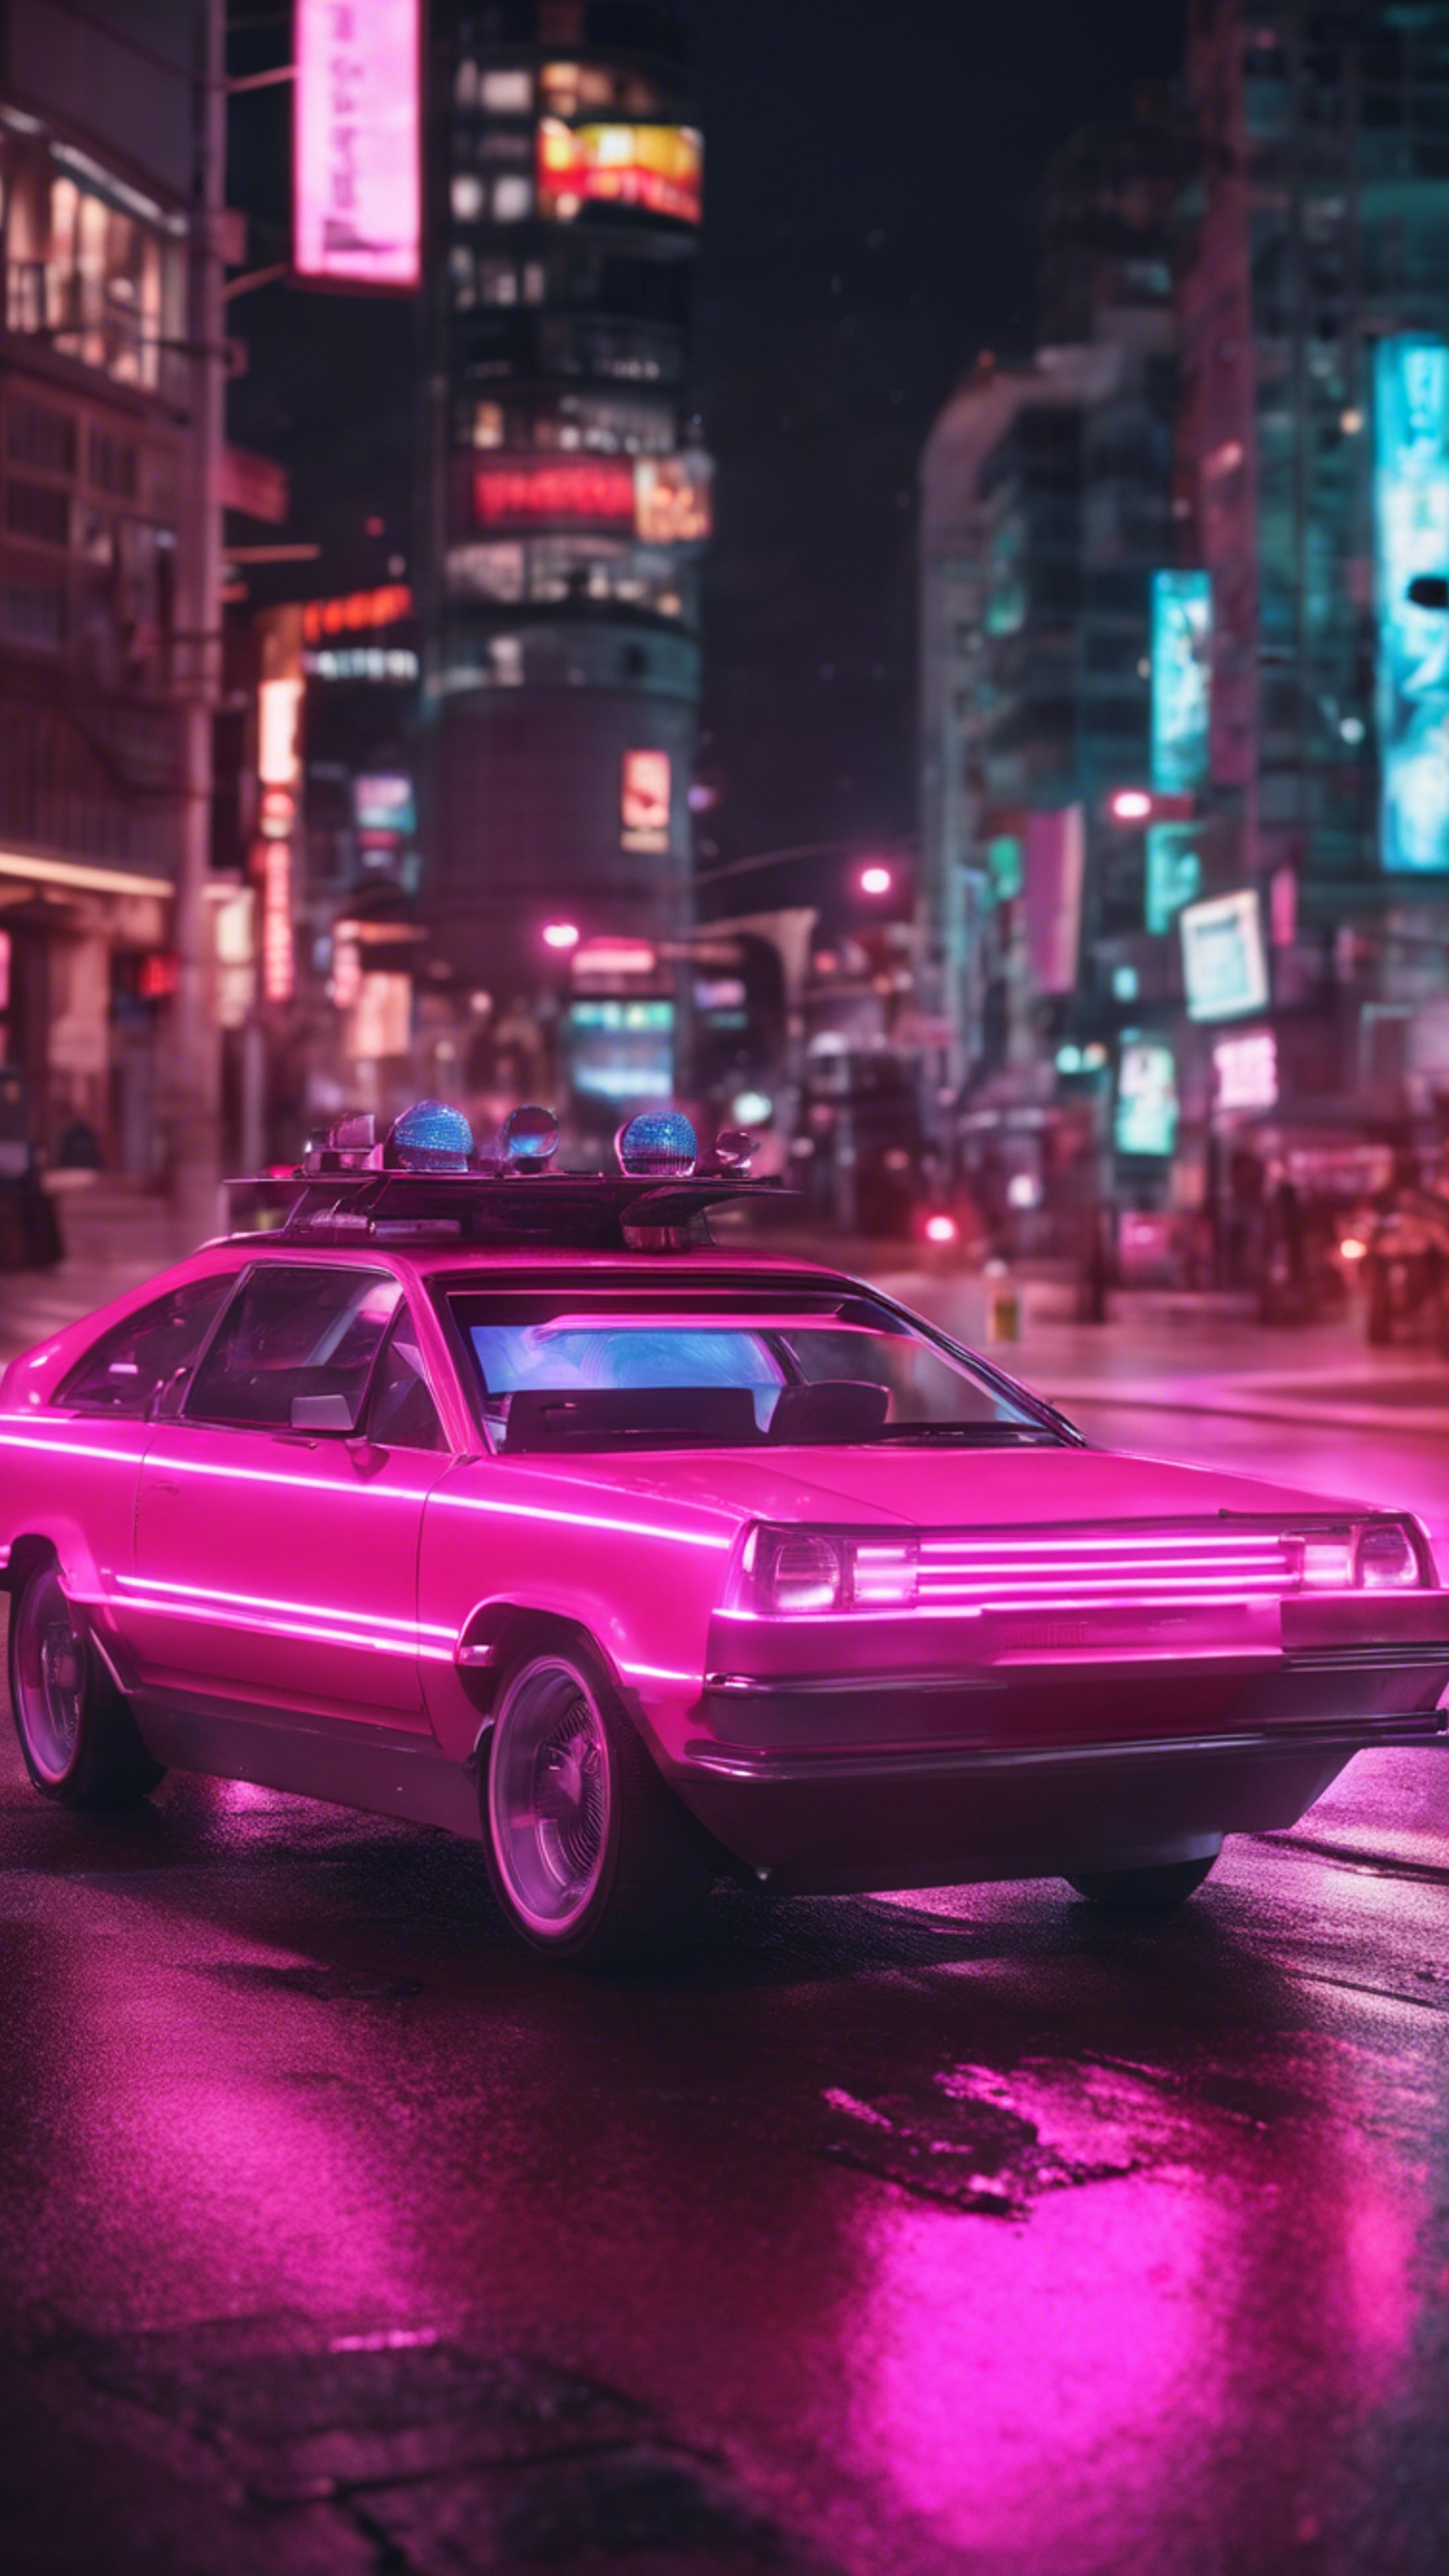 A futuristic neon pink hover car speeding down a city street at night. 벽지[fd9db959ca154b1985e4]